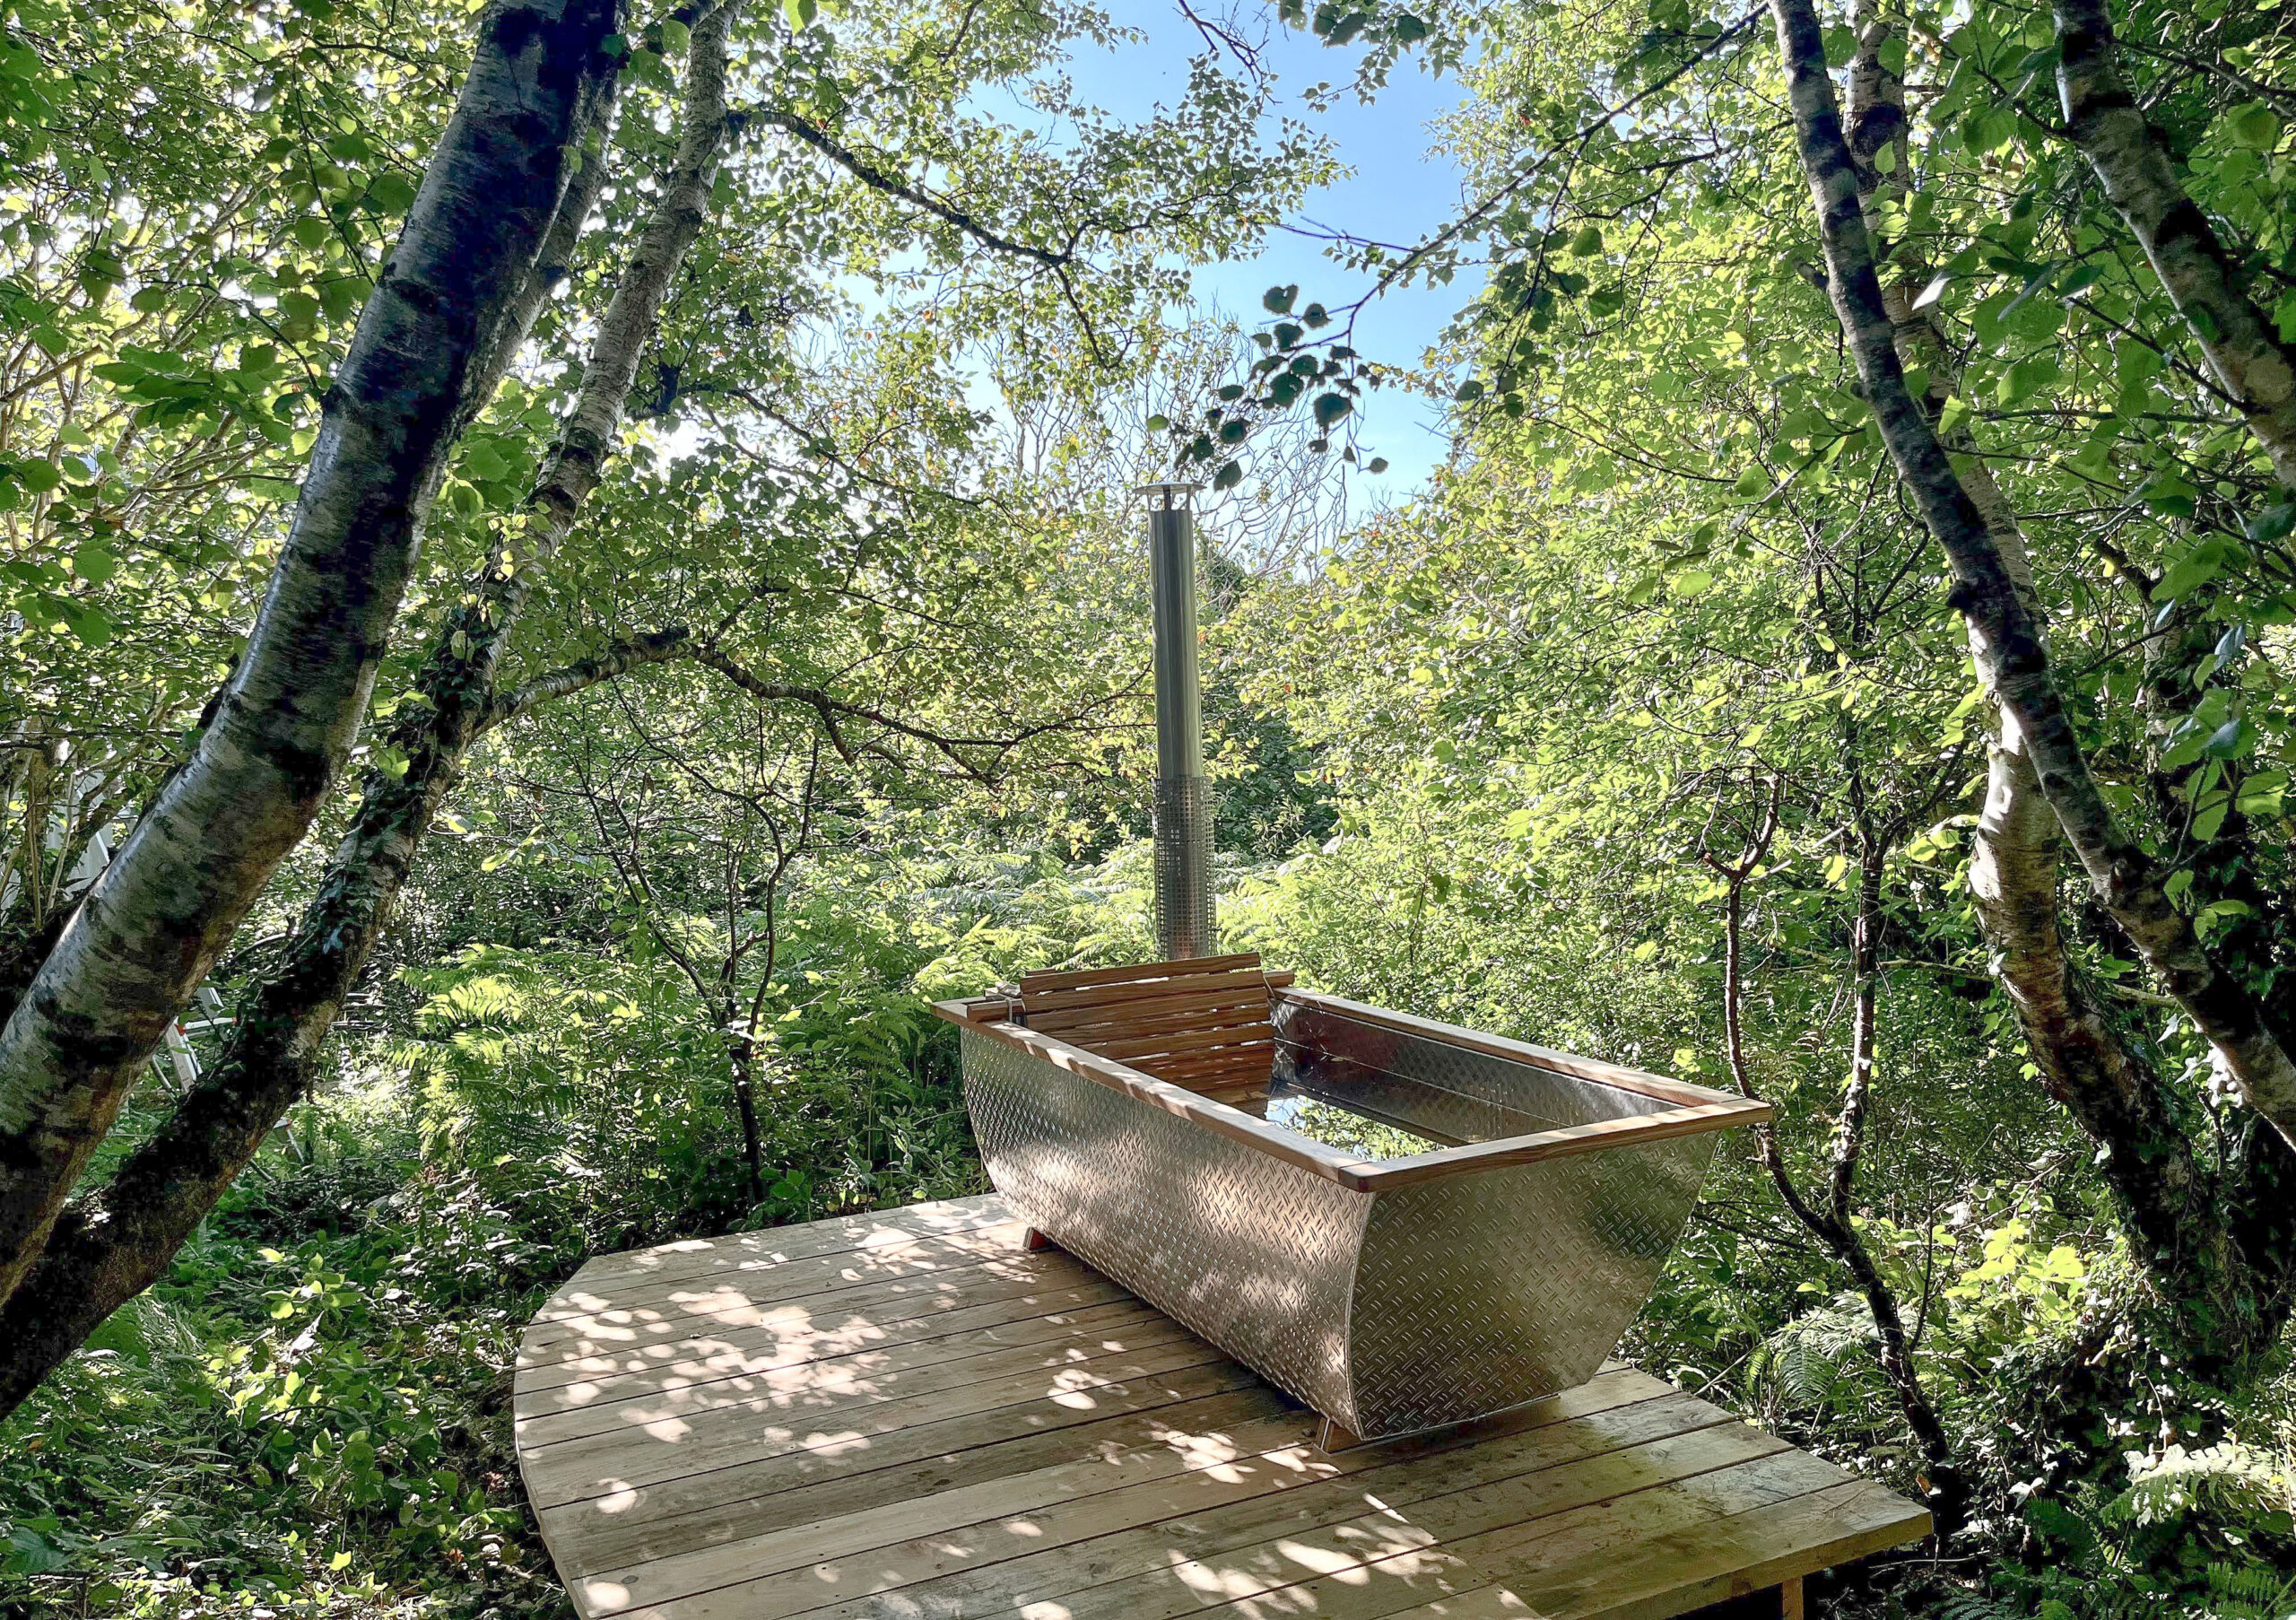 Outdoor bathtub amidst natural surroundings